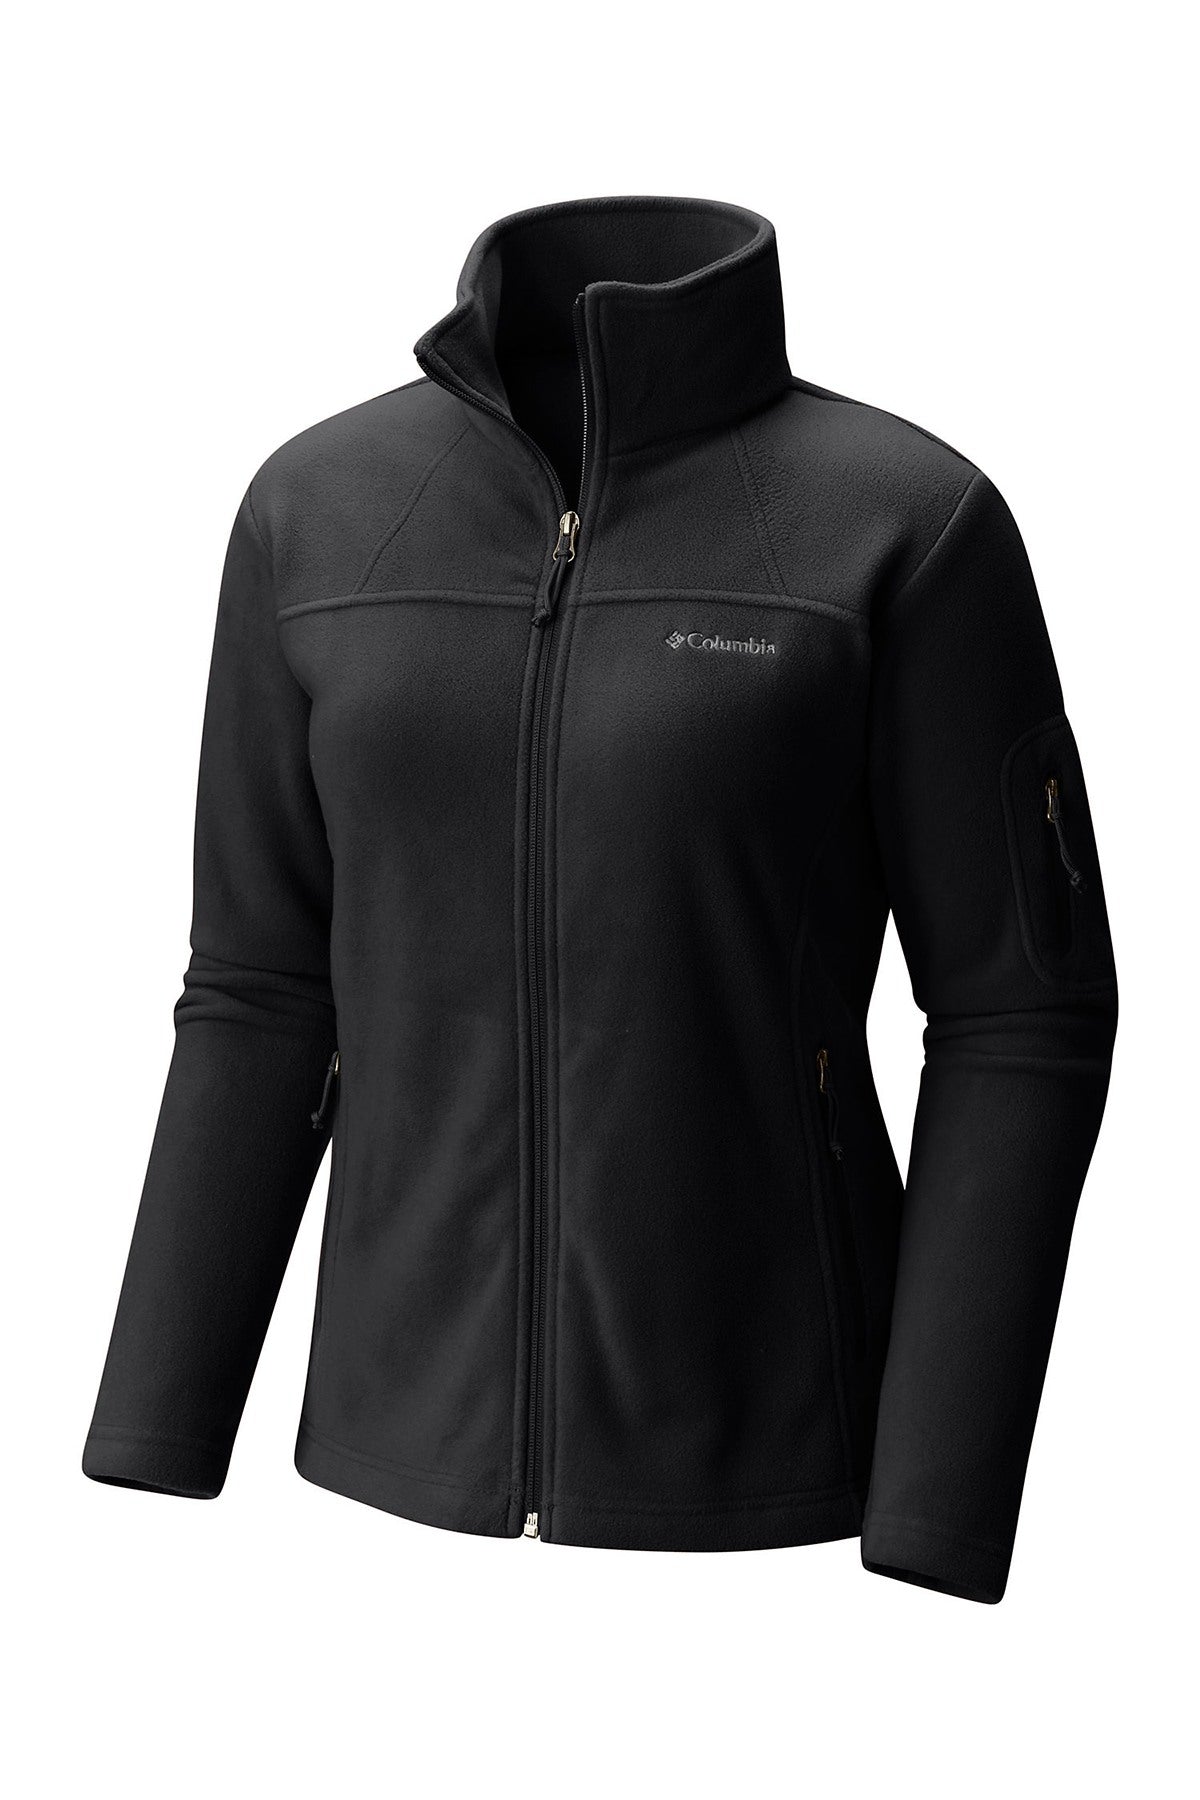 Columbia Black Cool Intervention Full-Zip Fleece Jacket